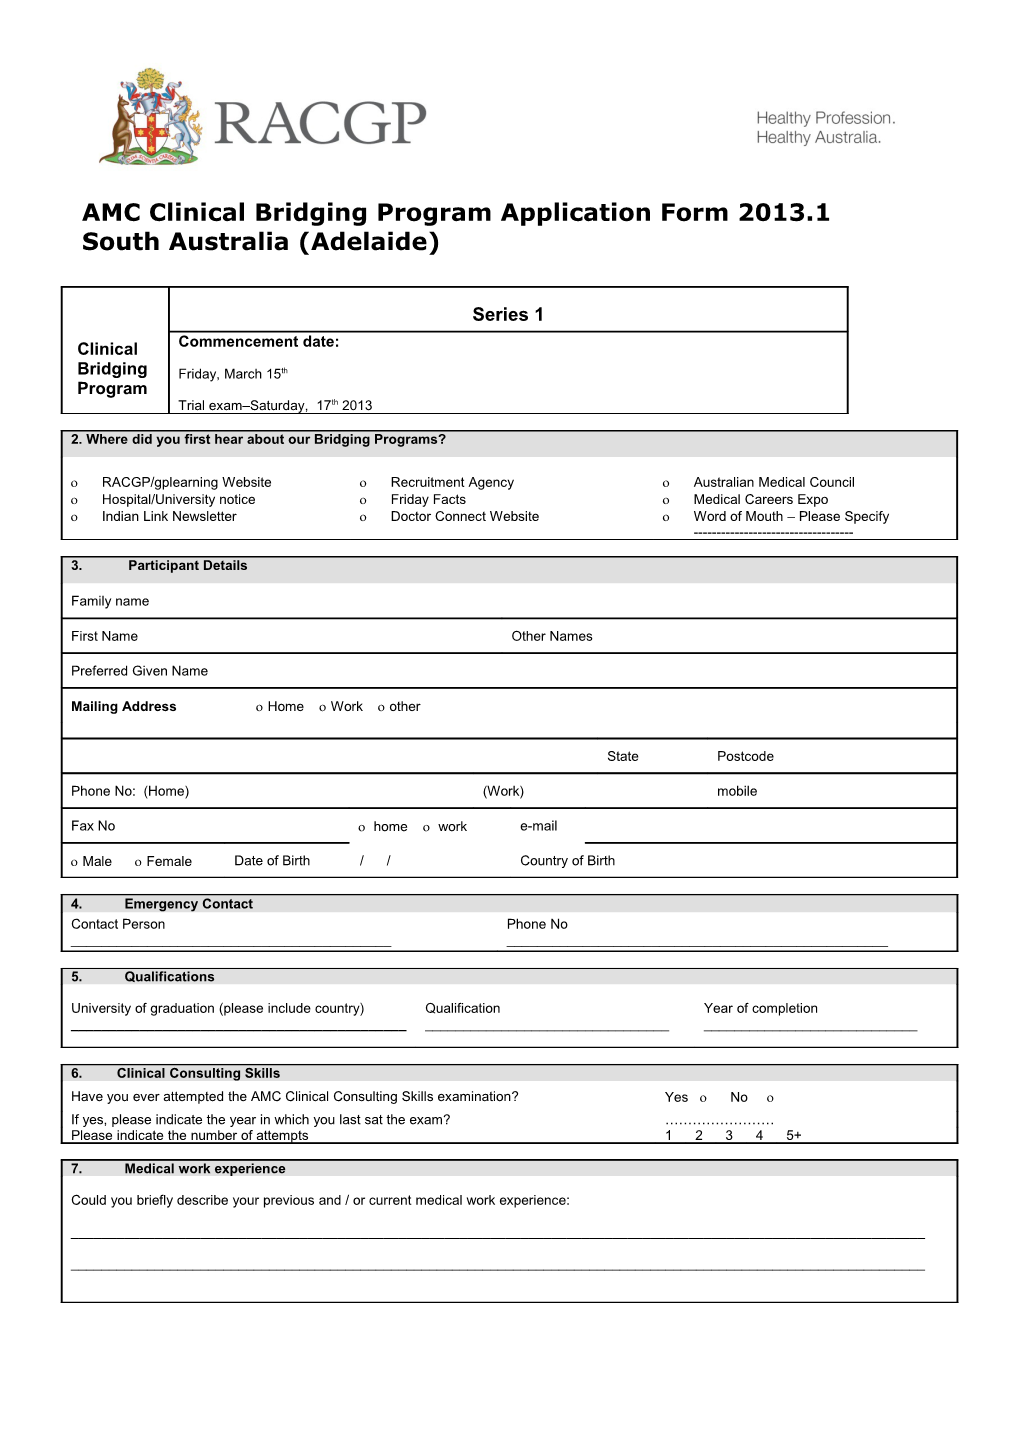 AMC Clinical Bridging Course Application Form